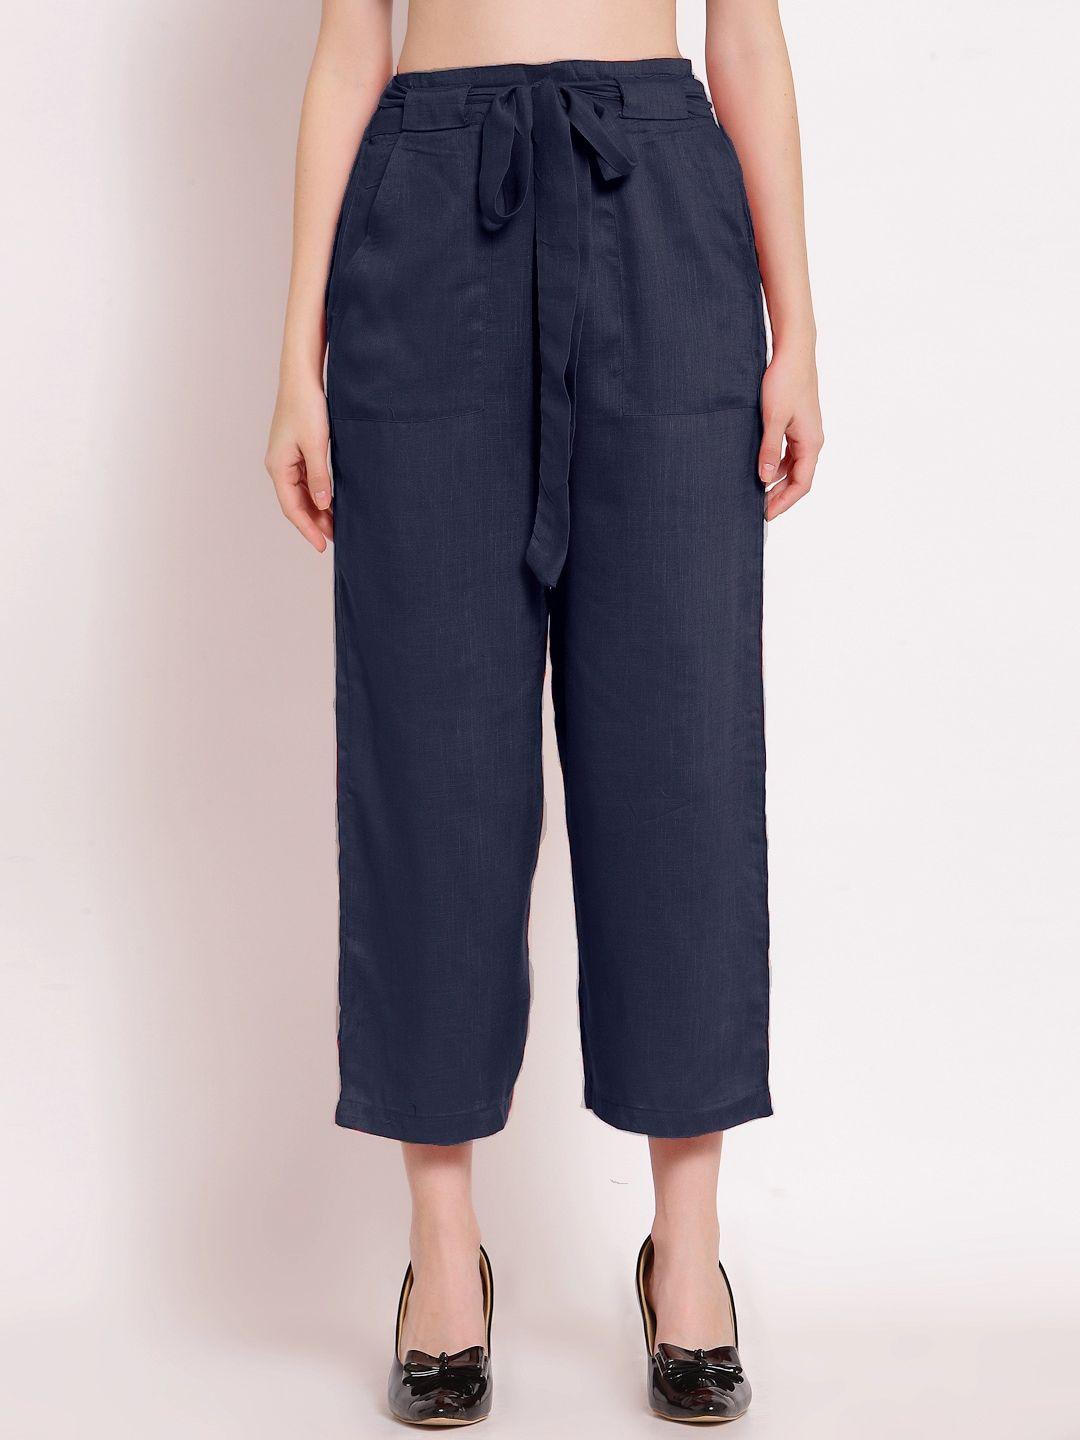 patrorna-women-smart-culottes-trousers